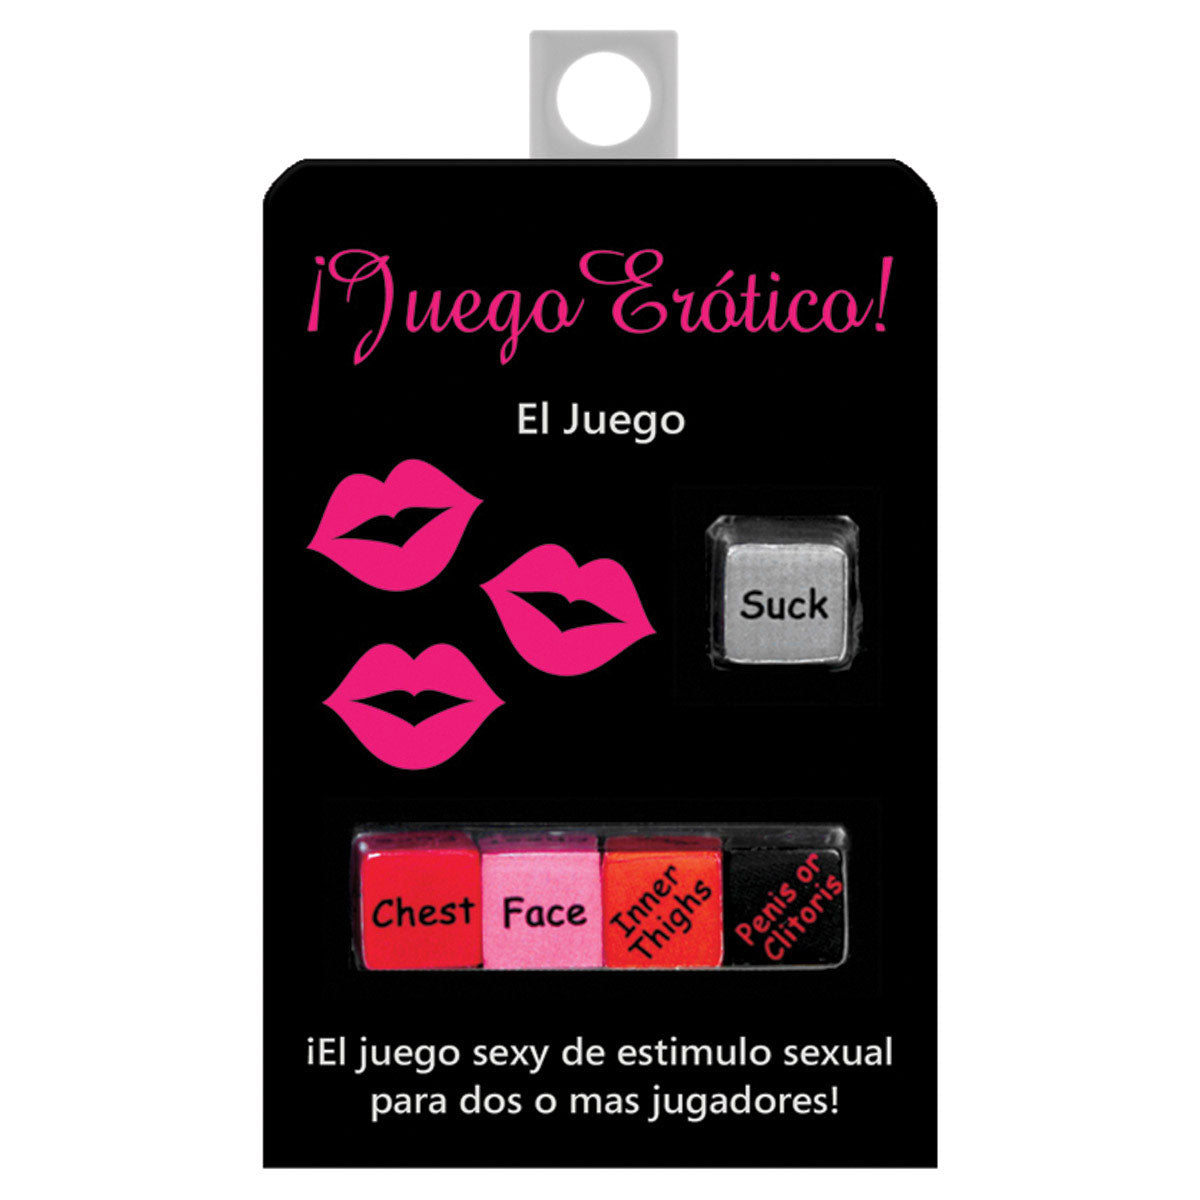 Juego Erotico Dice (Let's Fool Around Dice in Spanish)